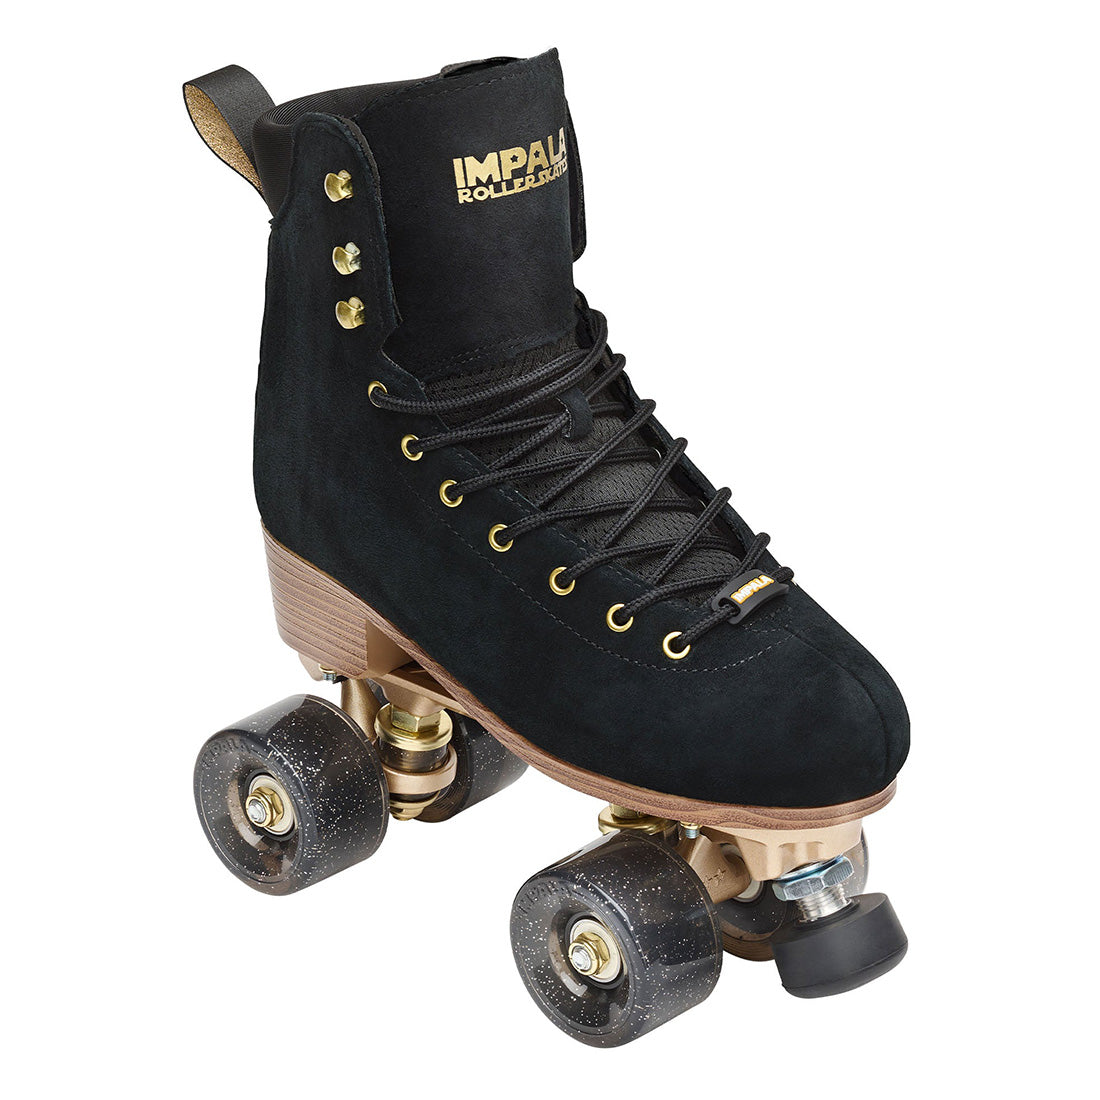 Impala Samira Suede - Black Night Roller Skates